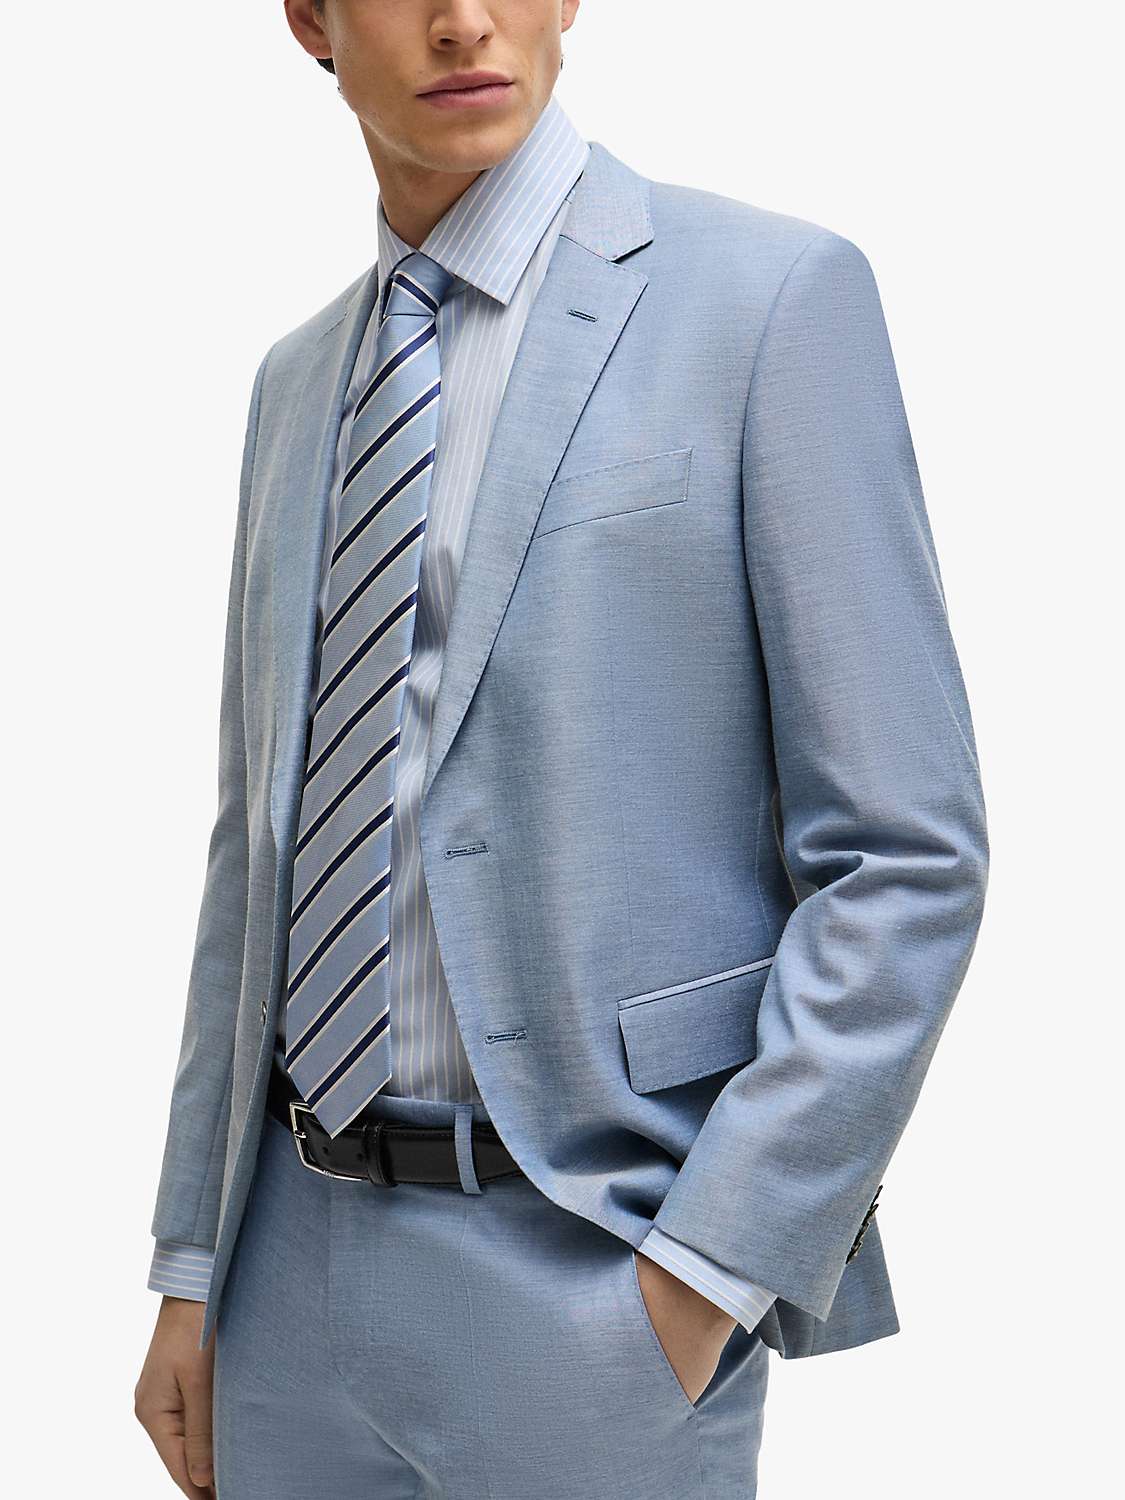 Buy BOSS Hank Slim Fit Pinstripe Shirt, Pastel Blue/White Online at johnlewis.com